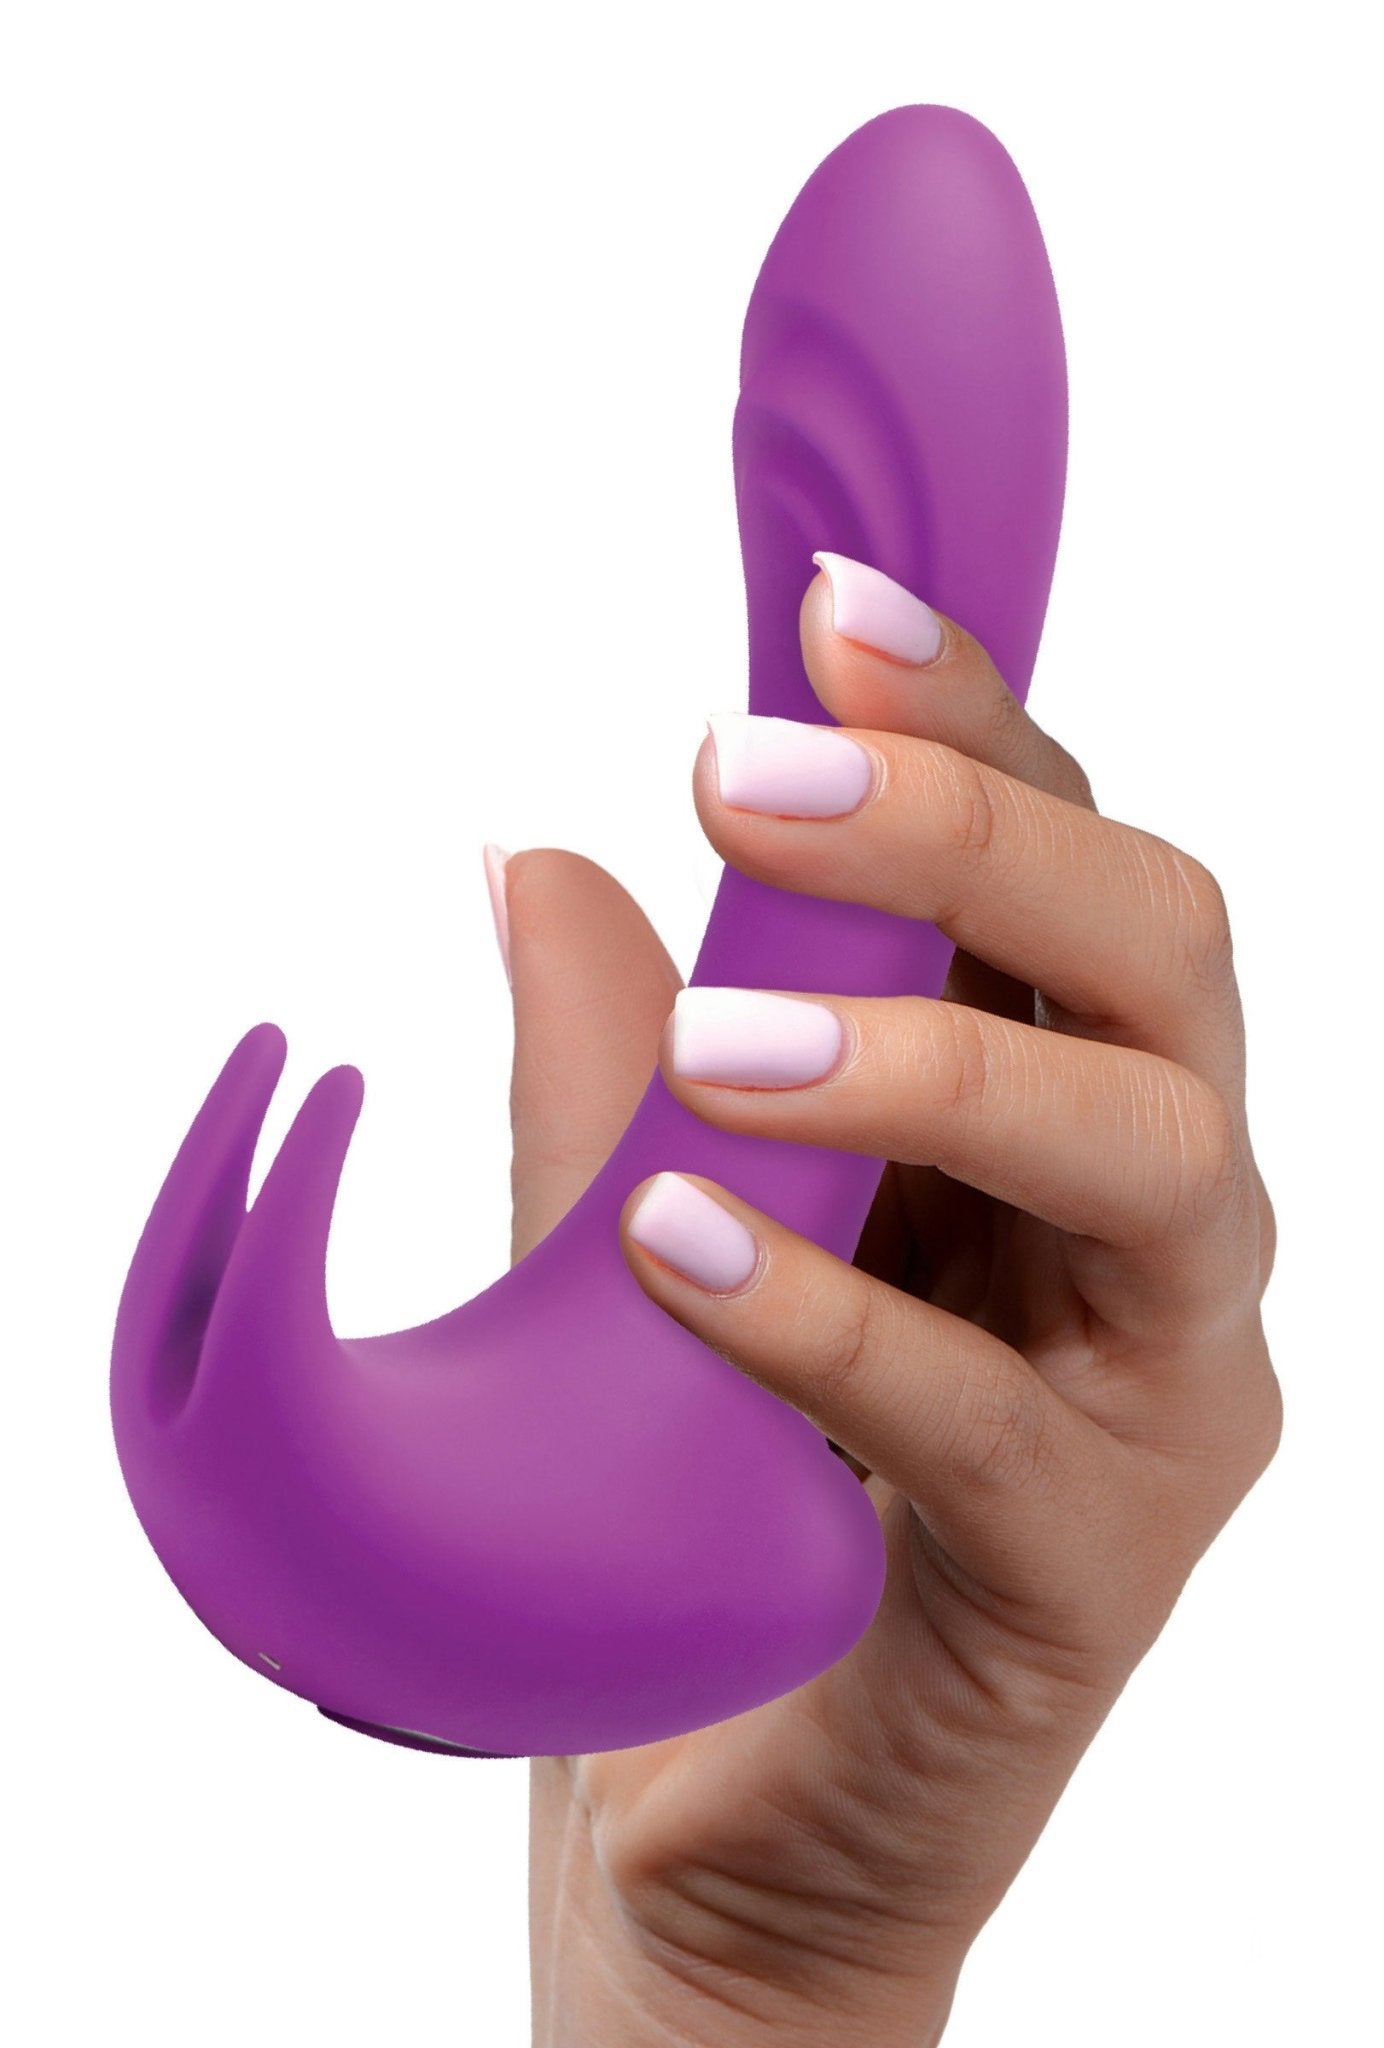 12x Lux Rocker Pulsing and Vibrating G-Spot Rabbit Vibrator - Pink